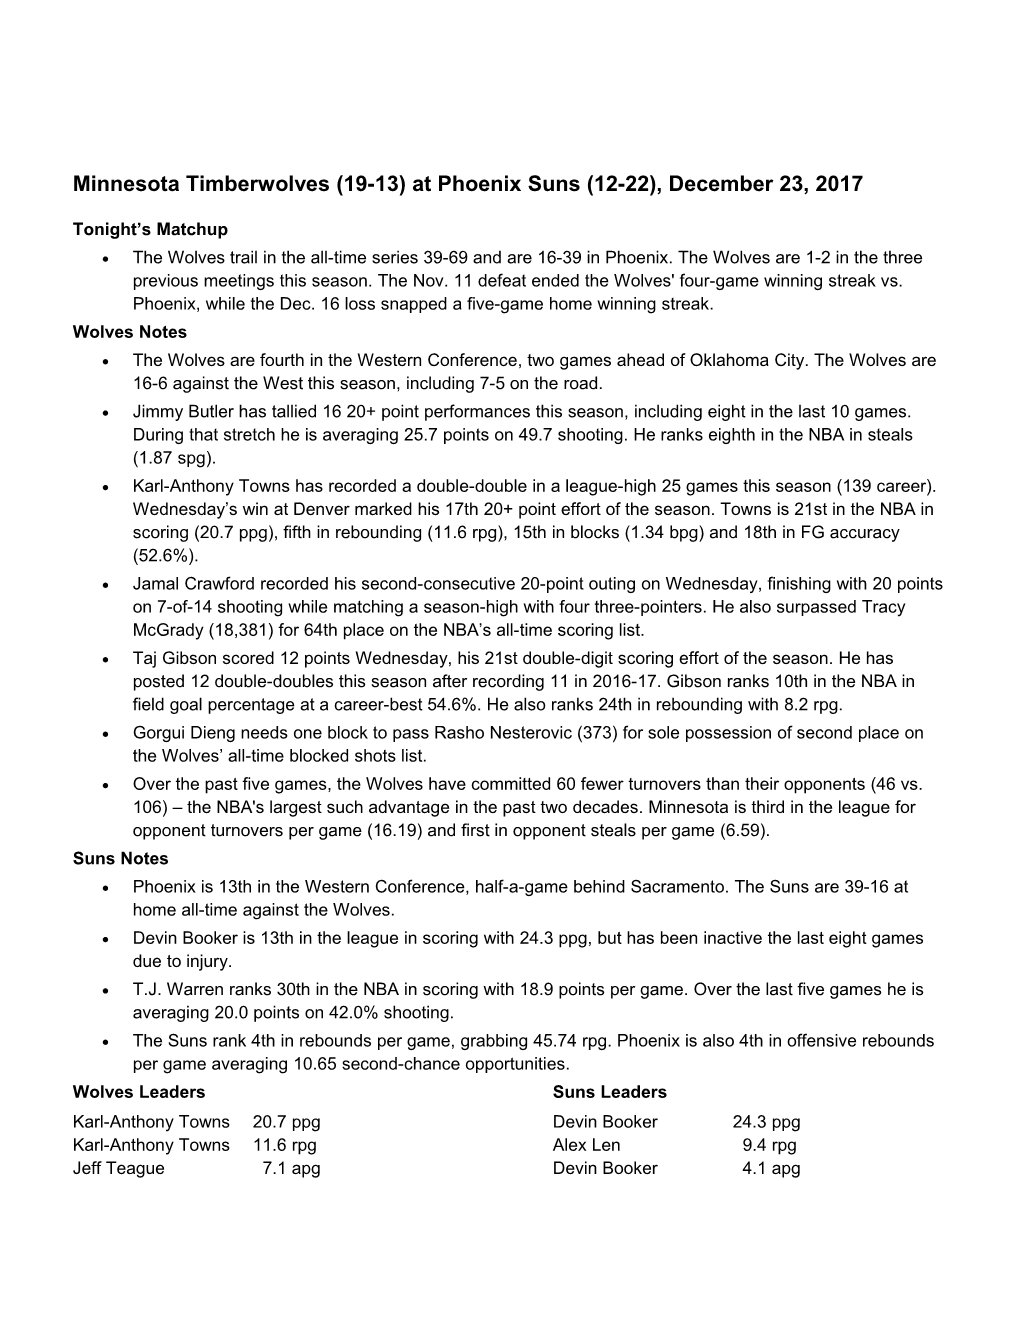 Minnesota Timberwolves (19-13) Atphoenix Suns (12-22), December 23, 2017